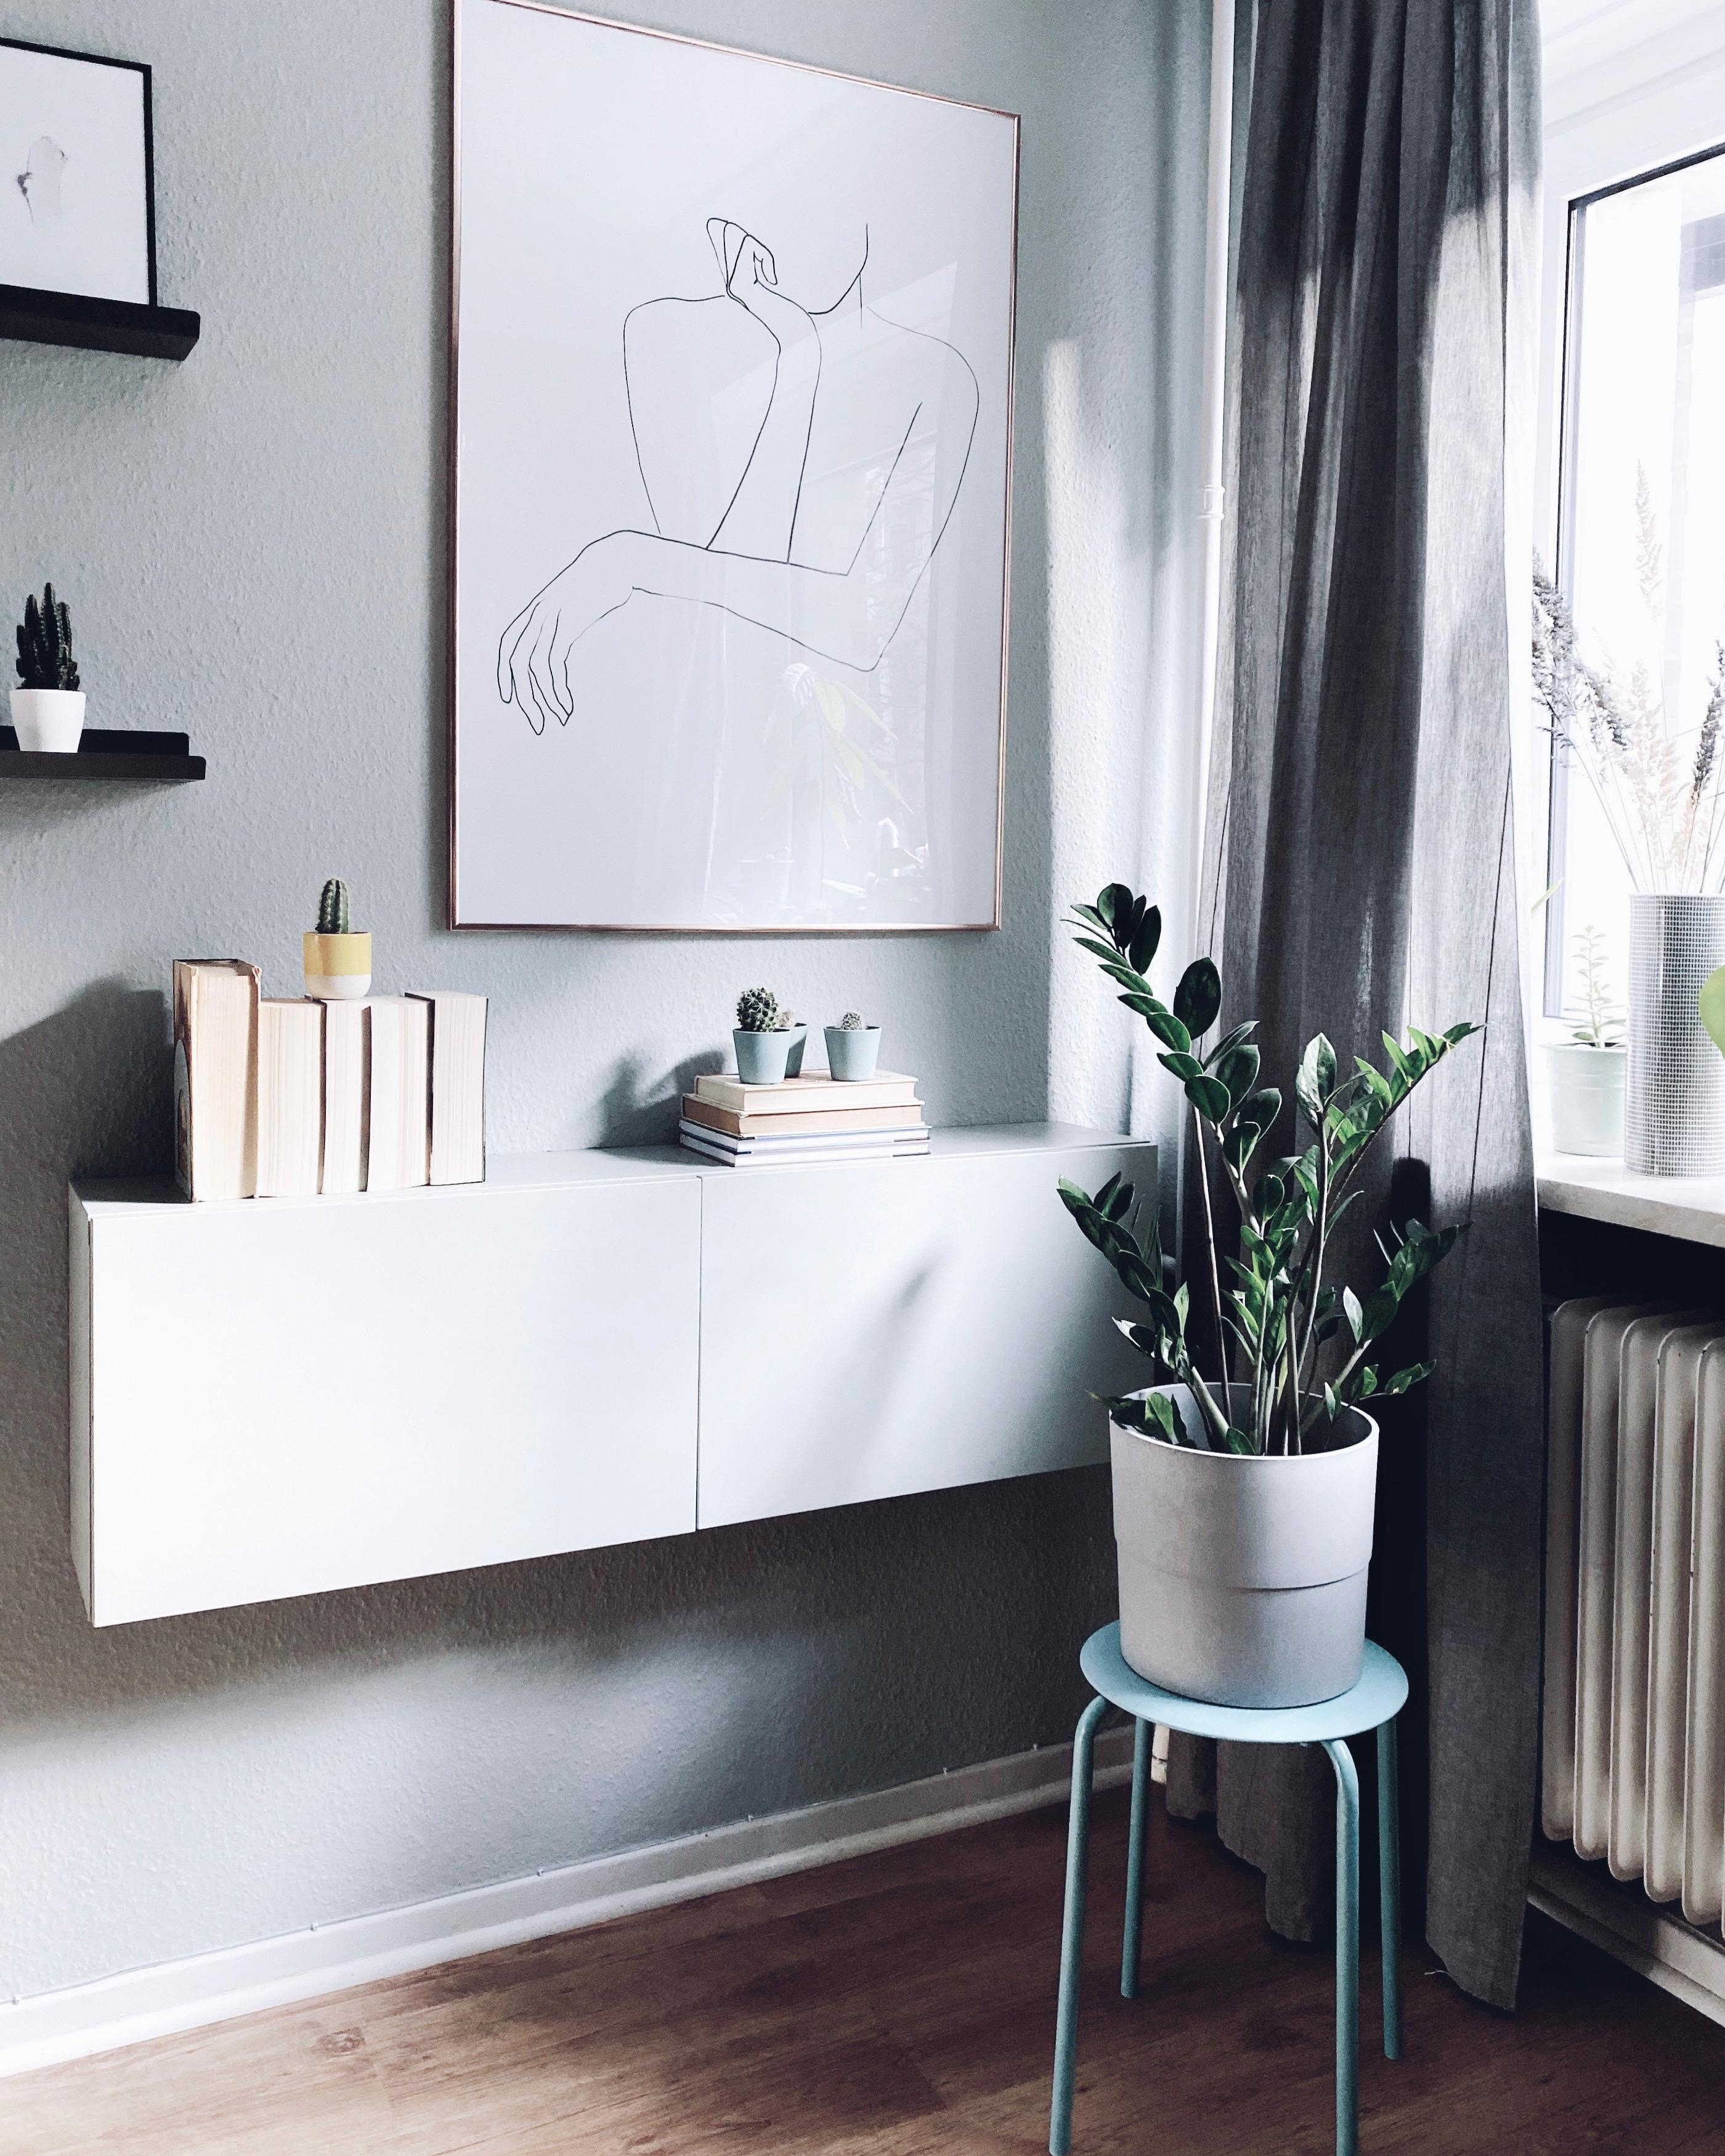 Meine grüne Ecke 😊
#bedroom #interior #scandinaviandesign #mynordicroom #minimalism #nordichome #hygge #pflanzenmuddi